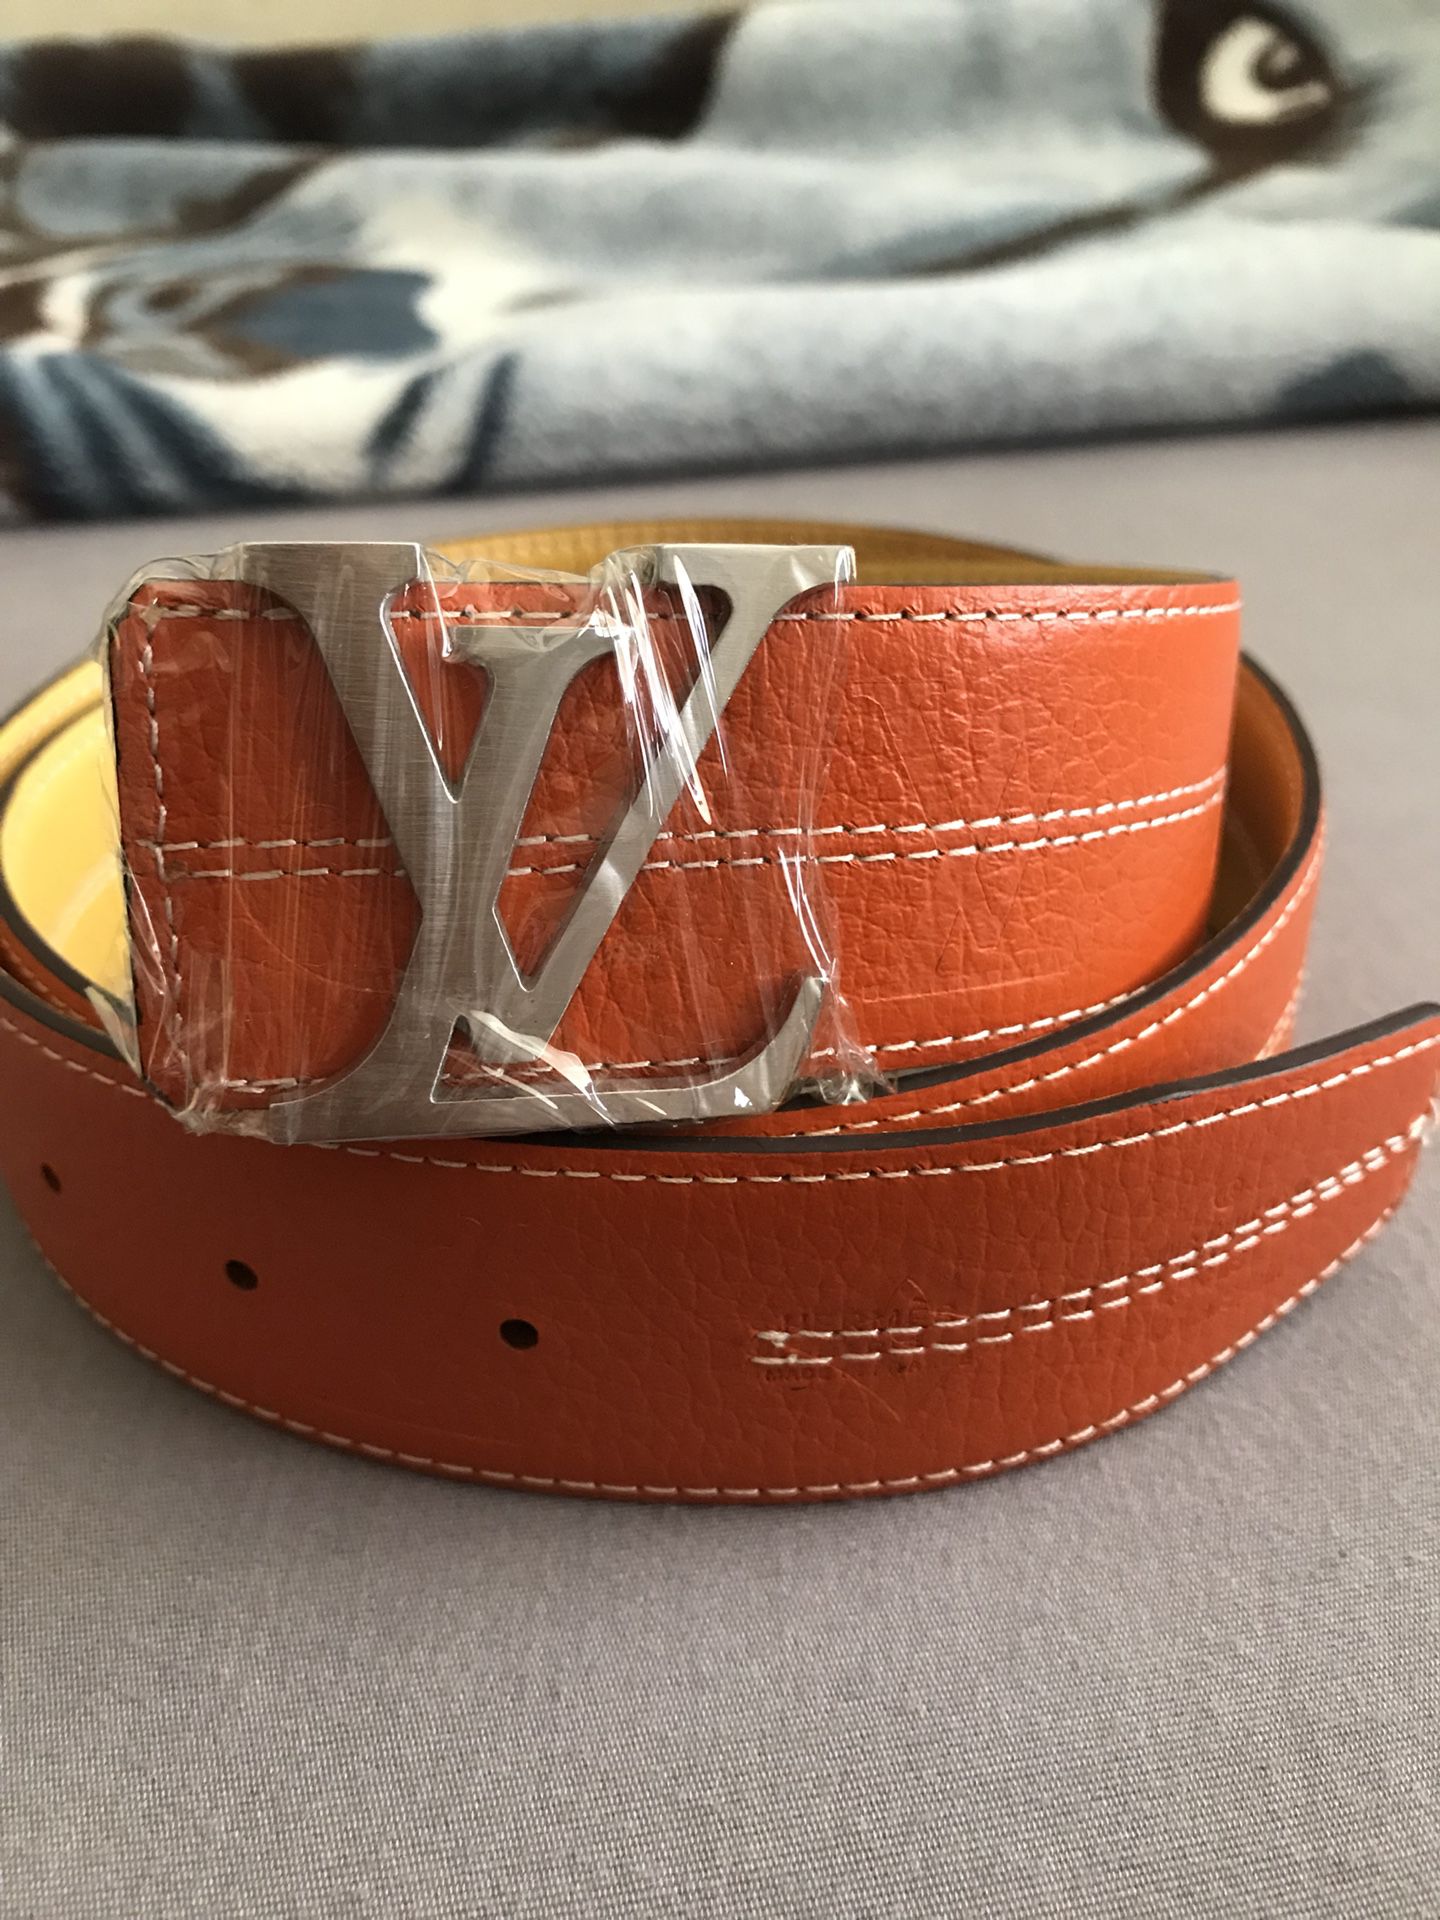 LV Belt for Sale in Green Bay, WI - OfferUp